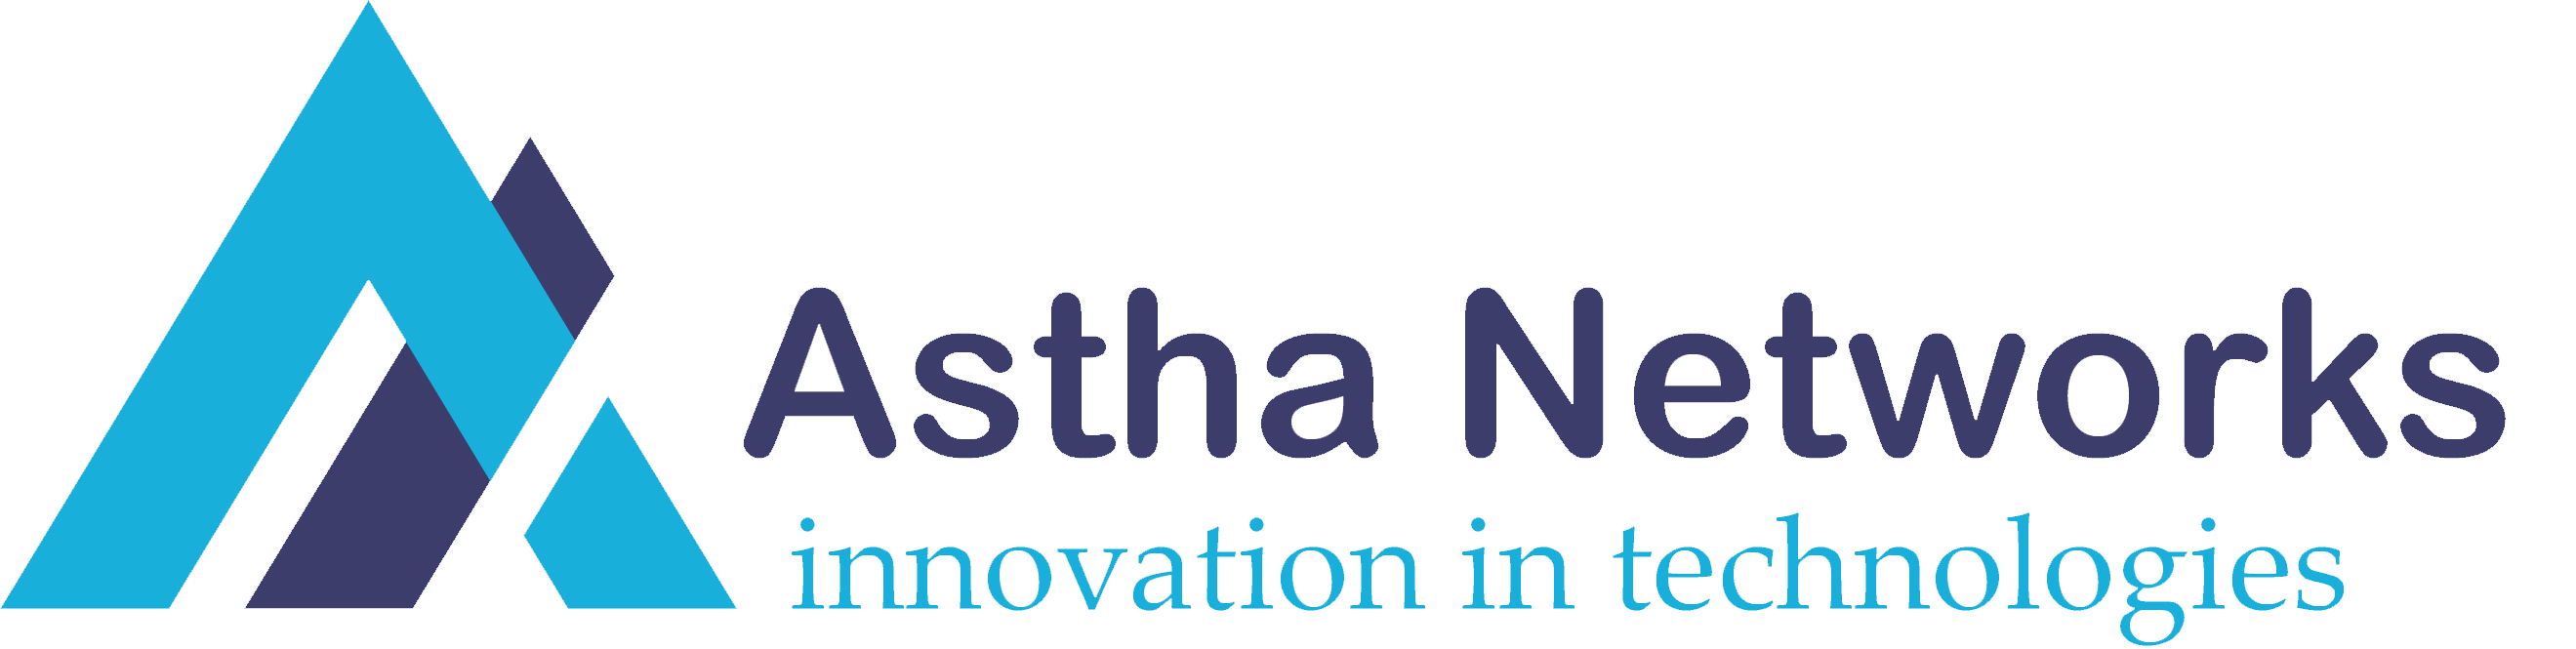 Astha Networks Logo